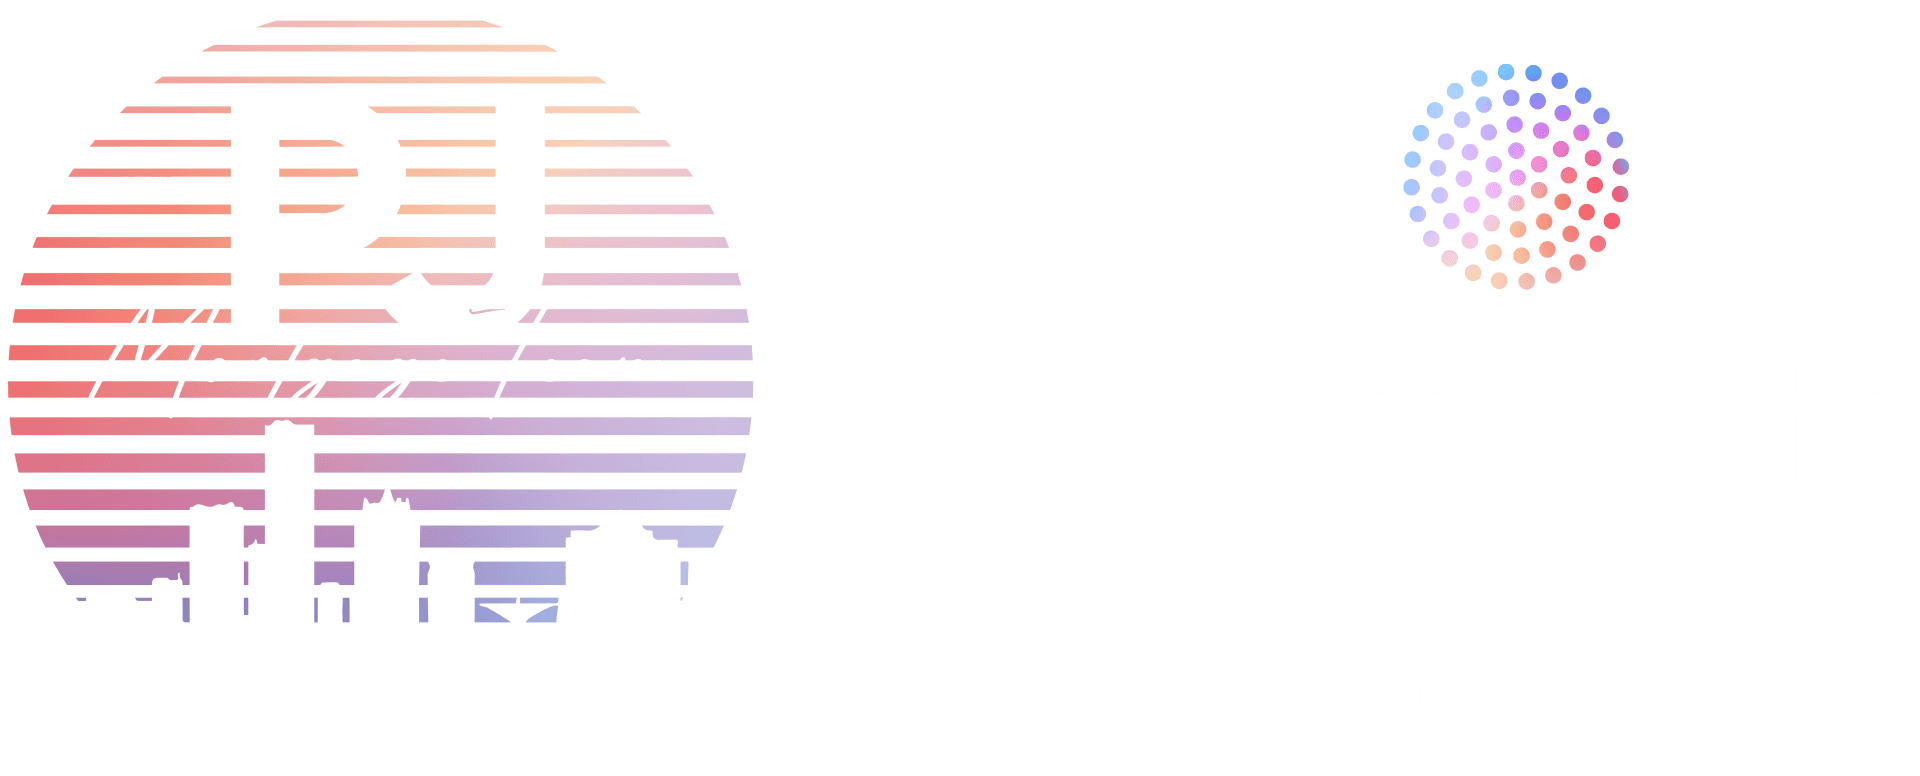 PJ Mortgage Team and Luminate Home Loans logo